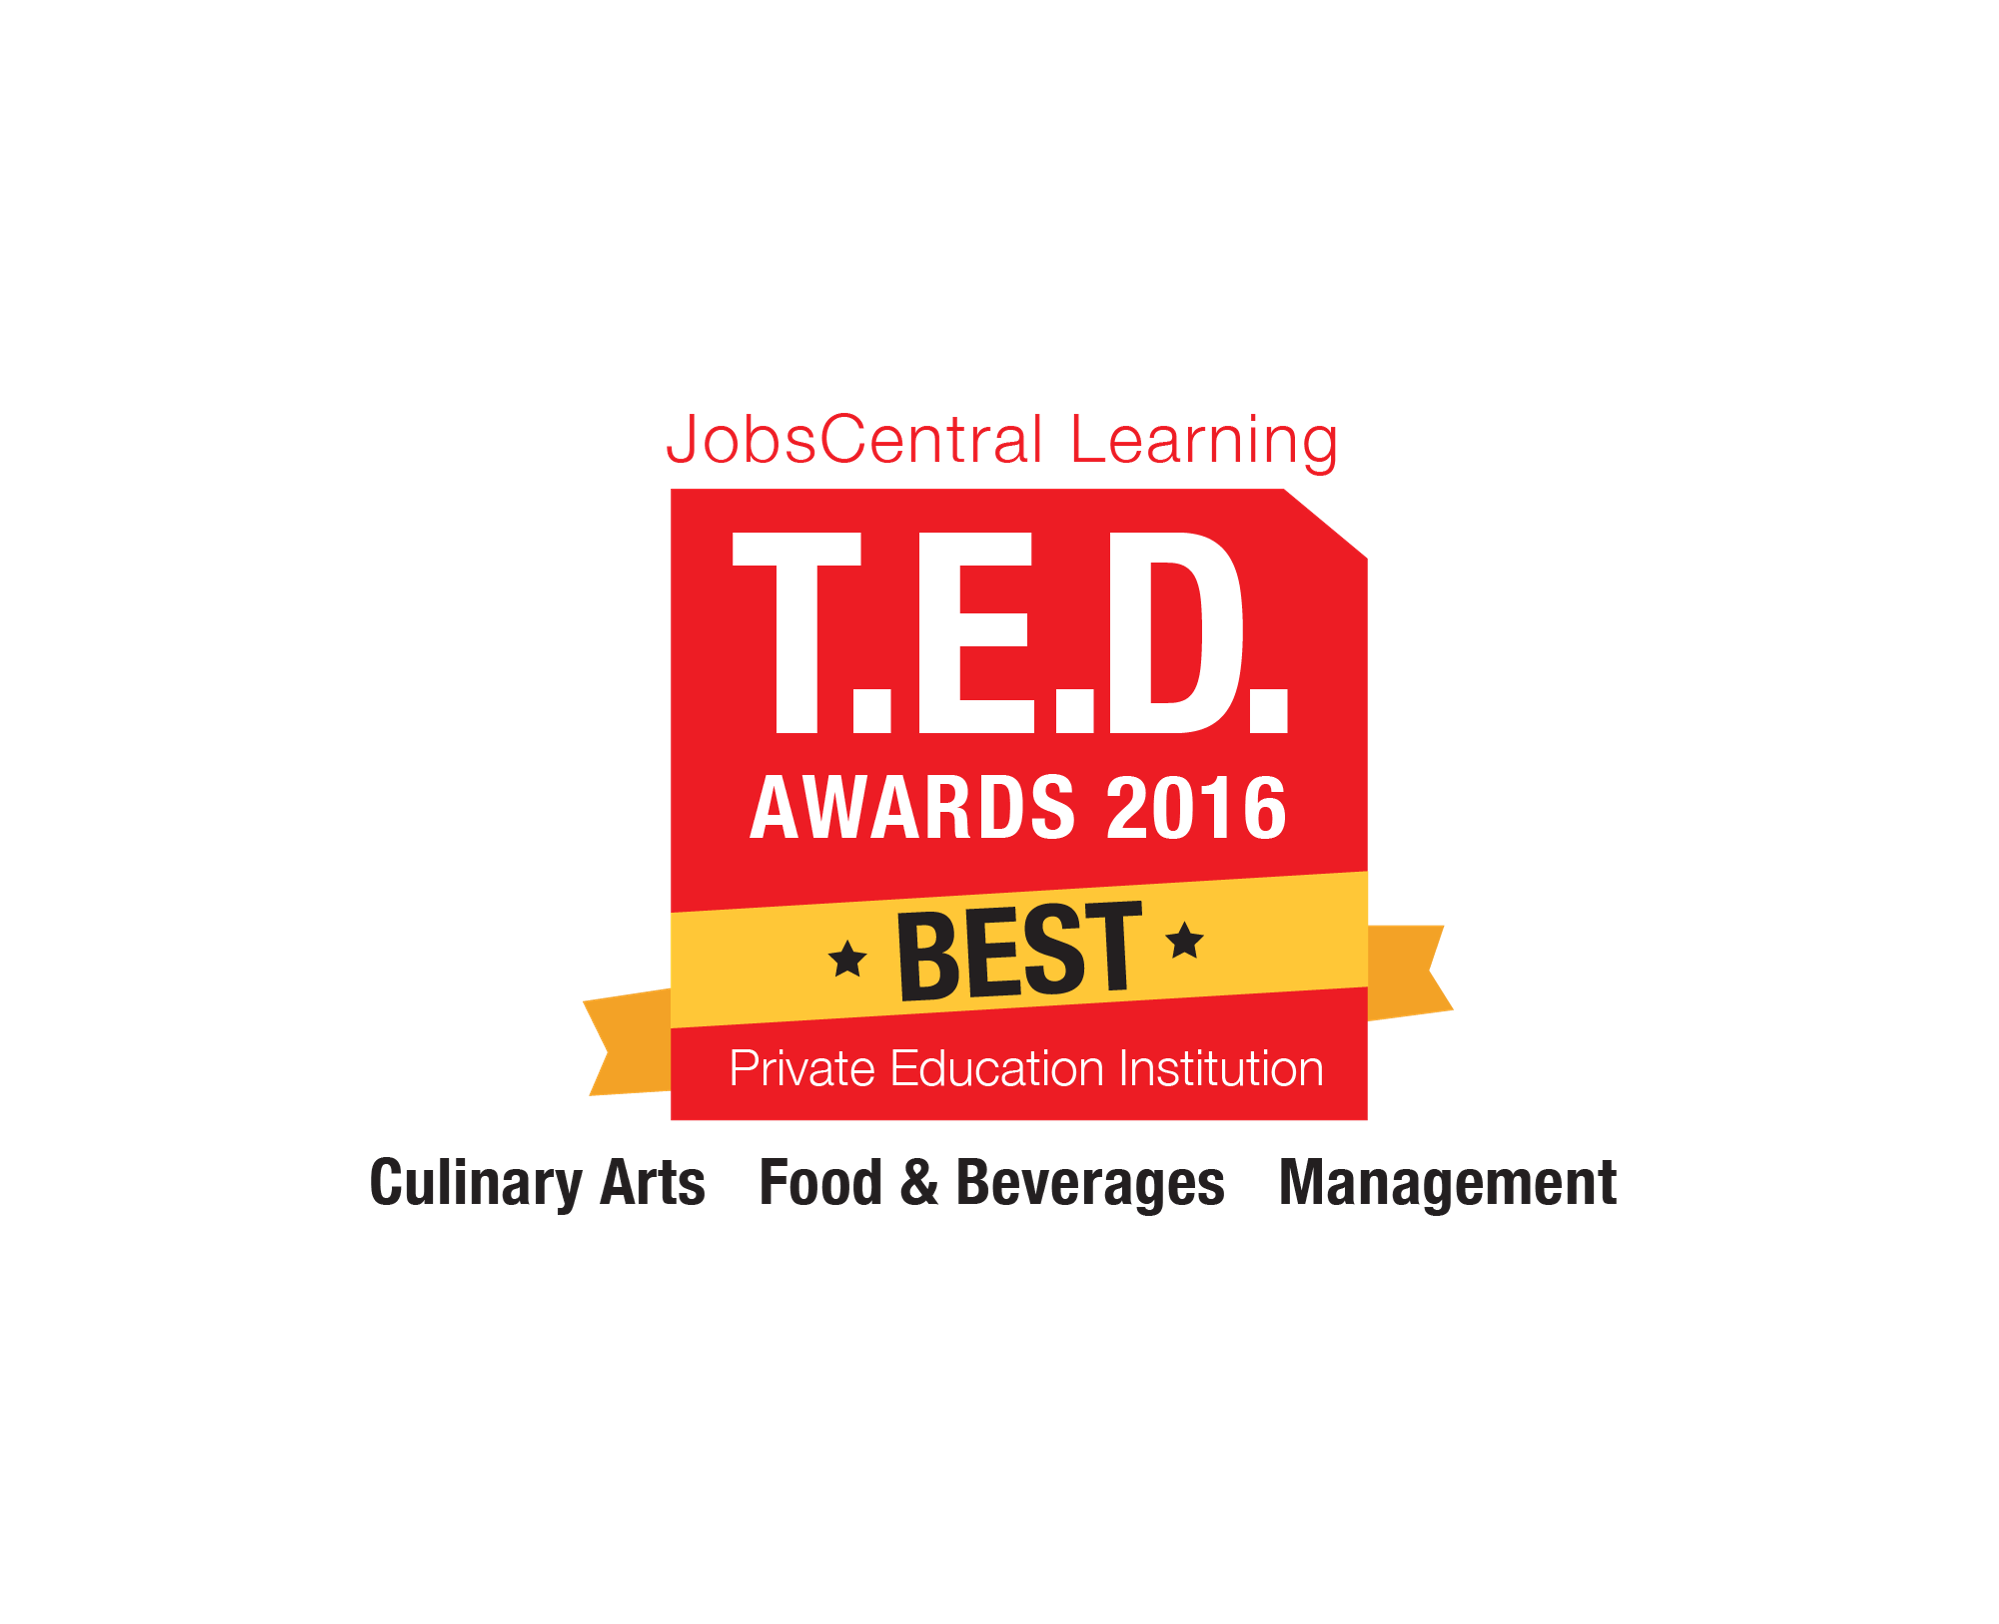 JobsCentral Learning T.E.D Awards